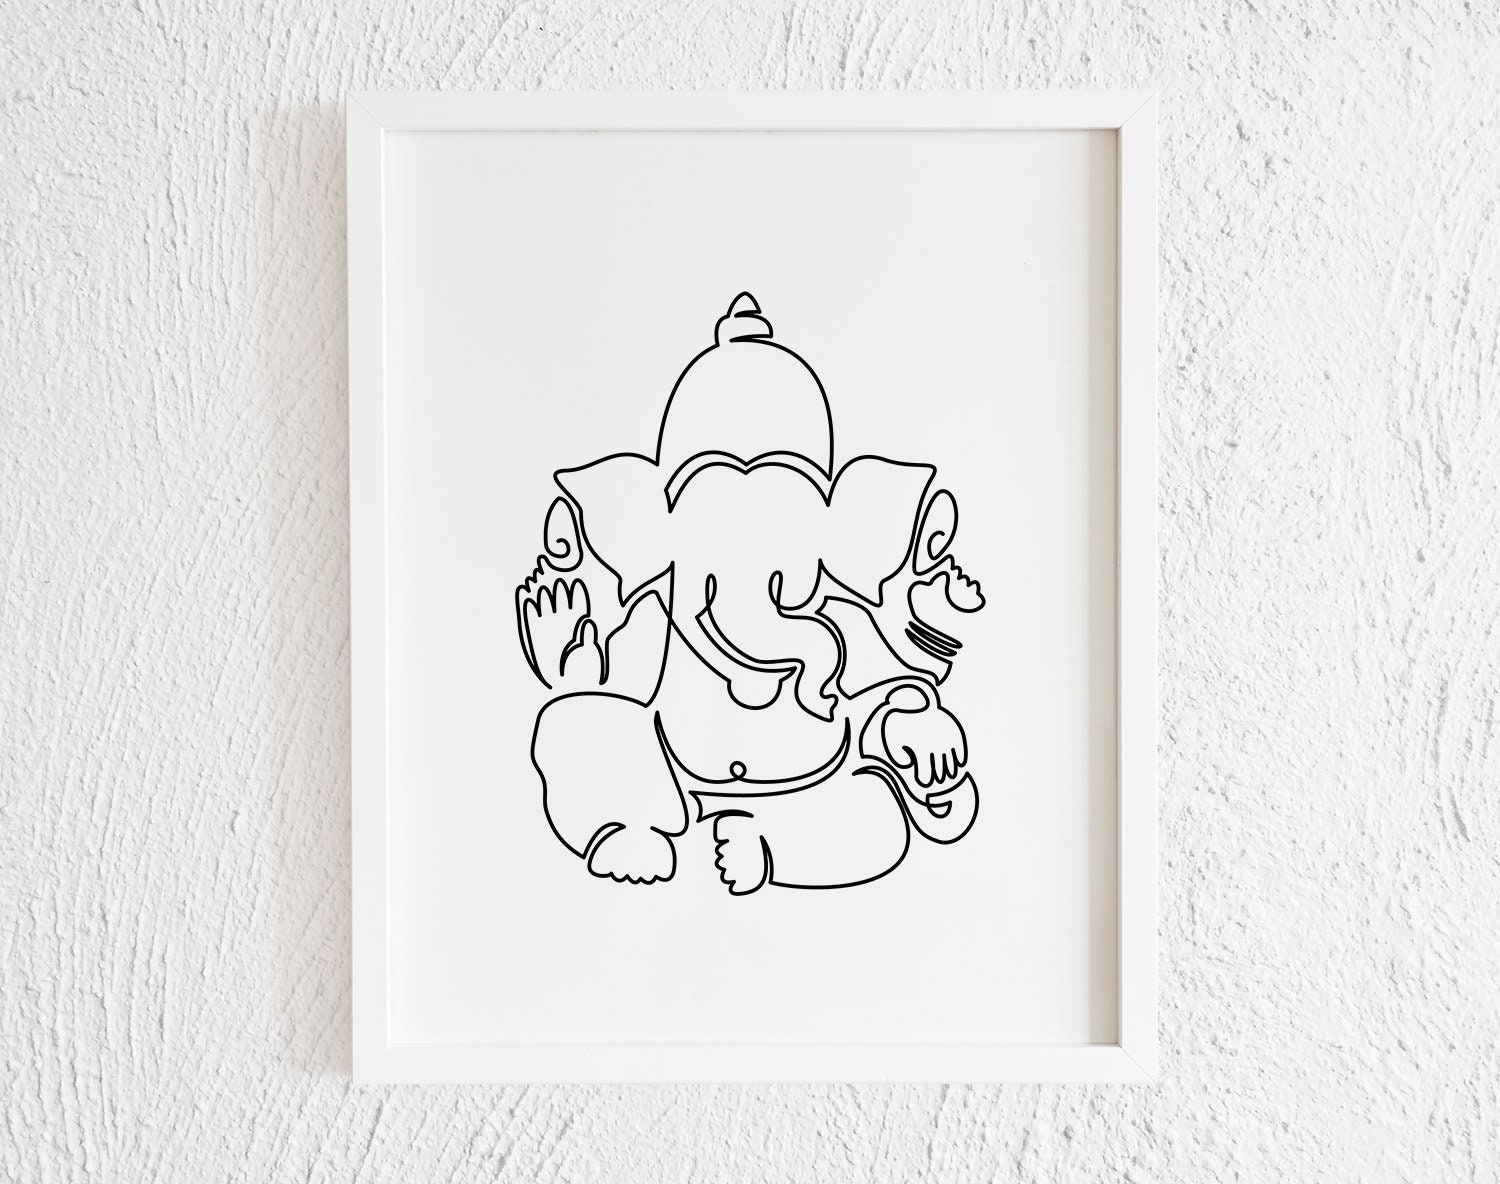 Ganesh Chaturthi Special | Draw Cute Bal Ganesha | Lord Ganesha Painting |  How to Draw Ganpati - YouTube